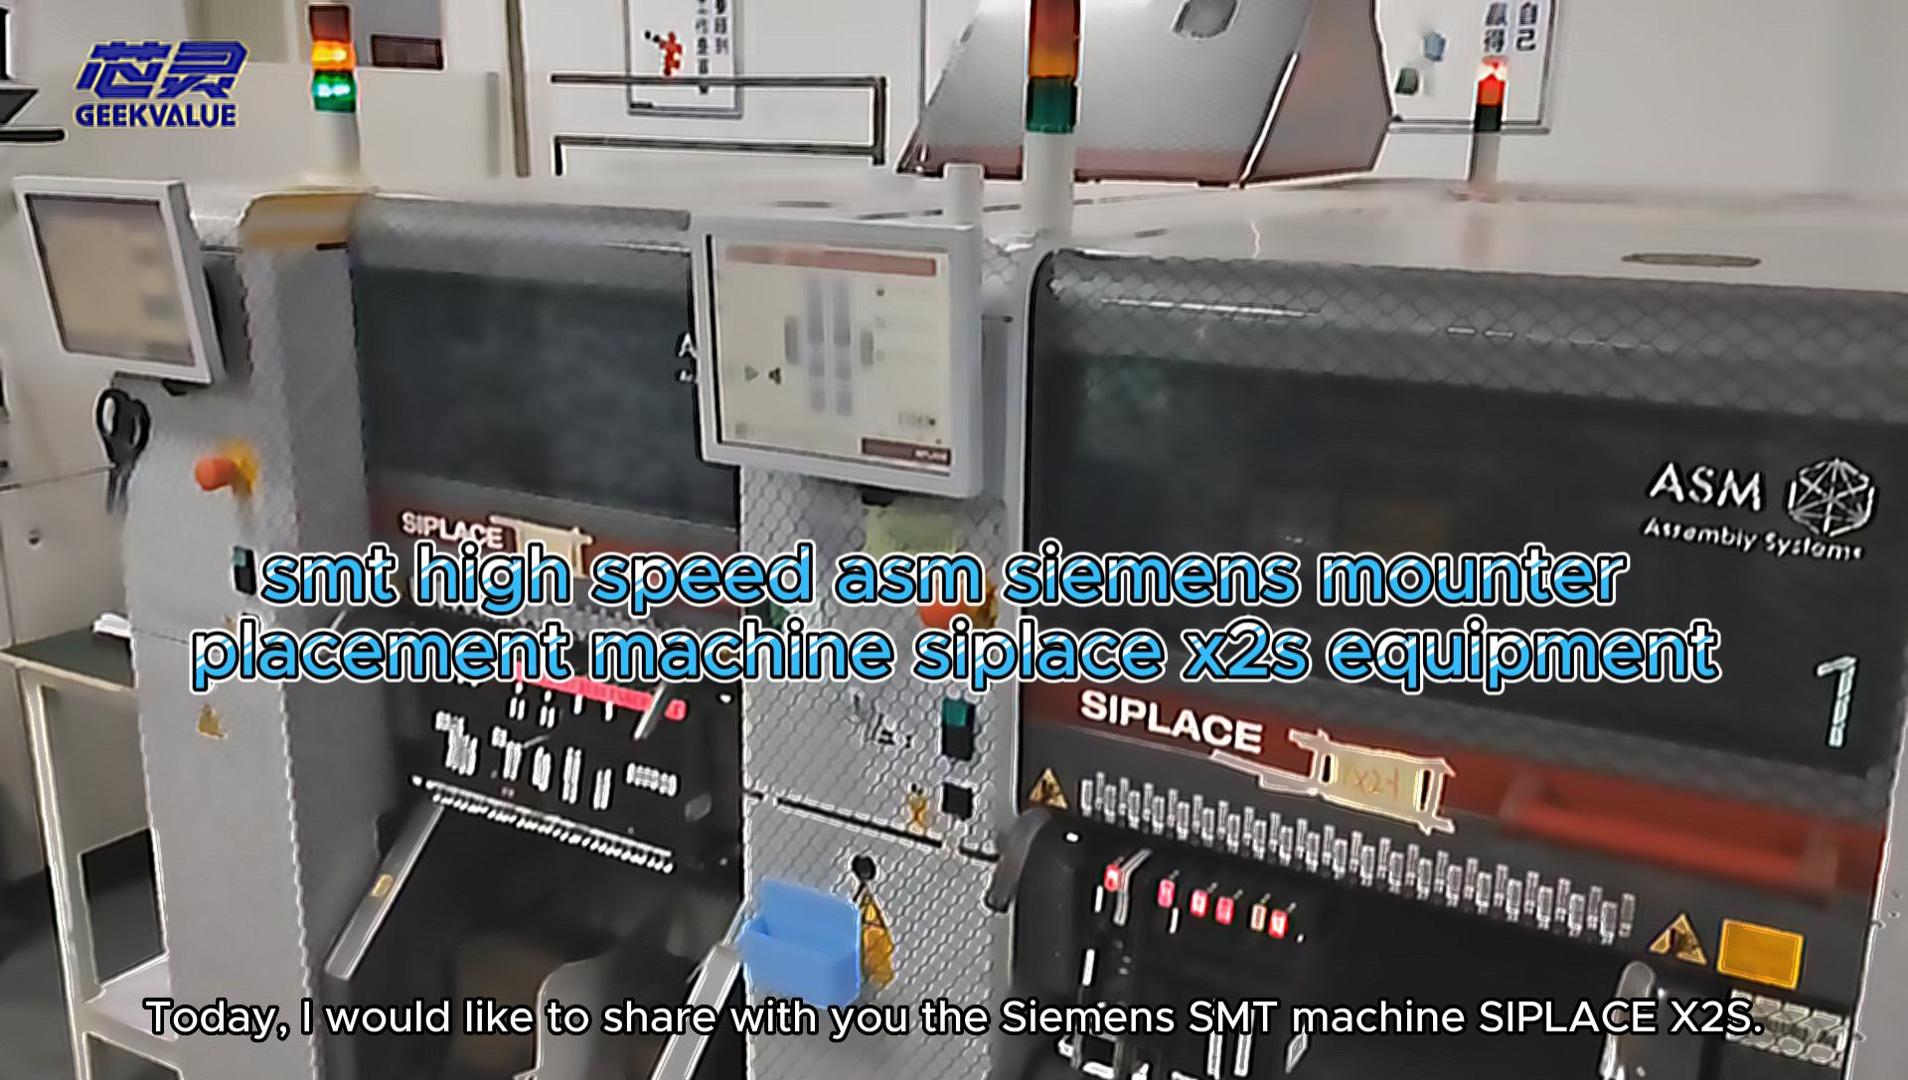 smt high speed asm siemens mounter placement machine siplace x2s equipment